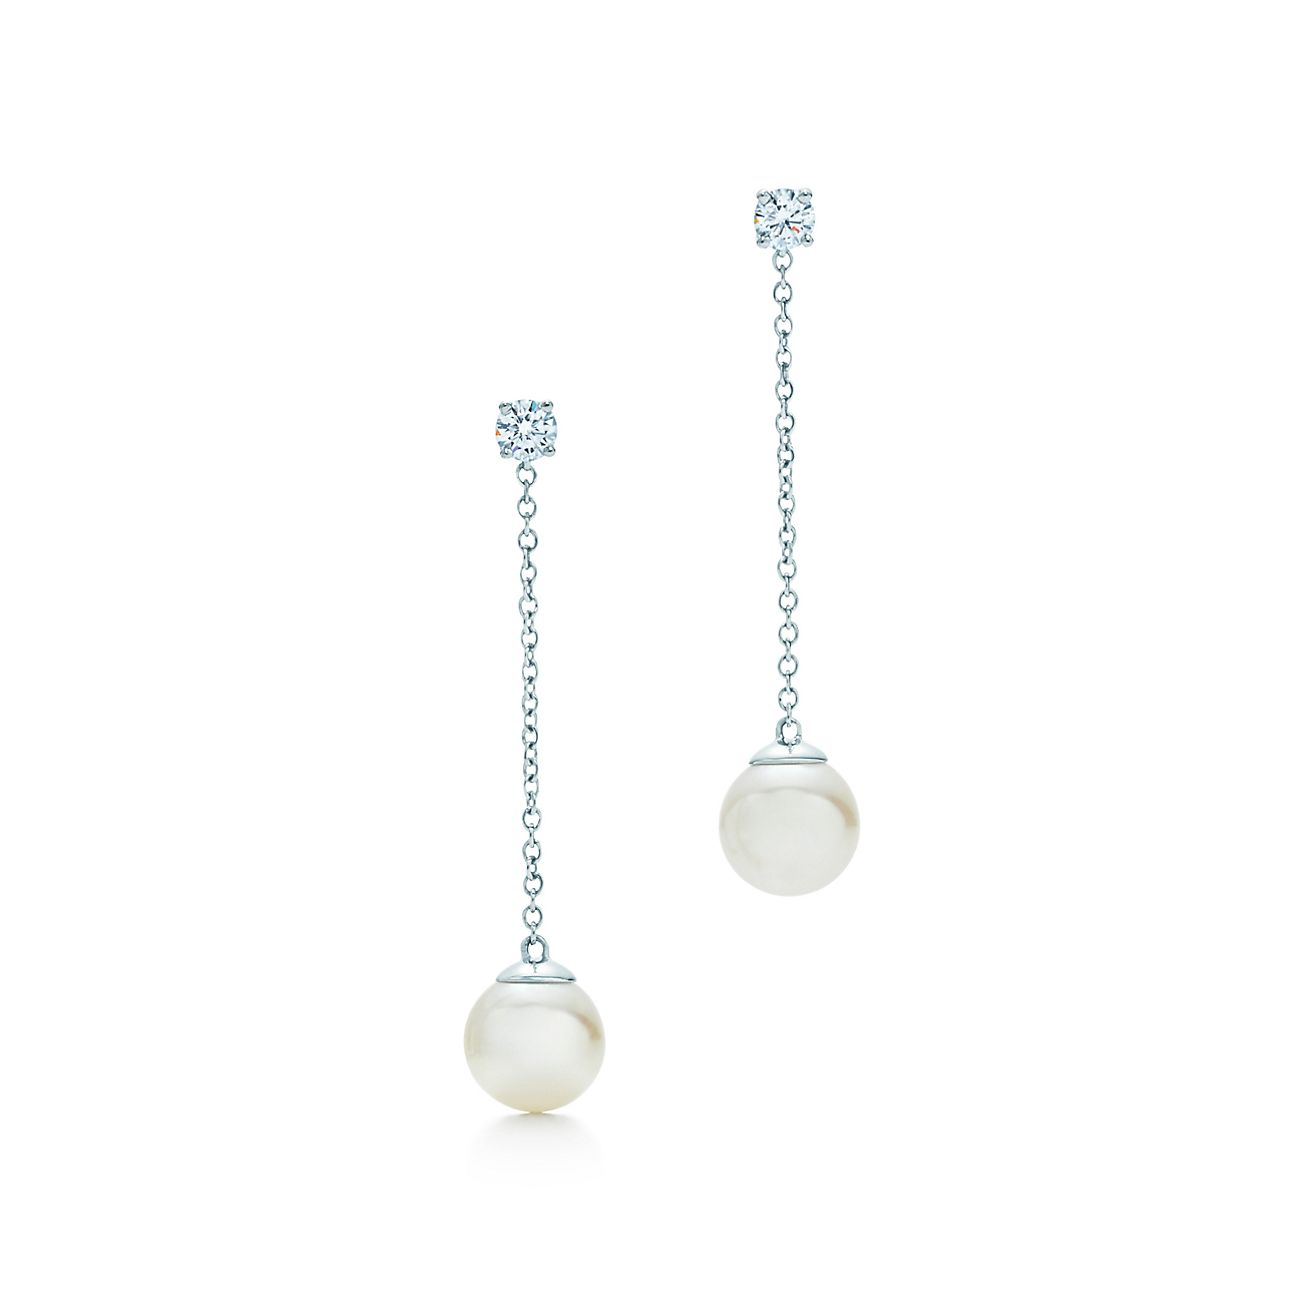 tiffany and company pearl earrings